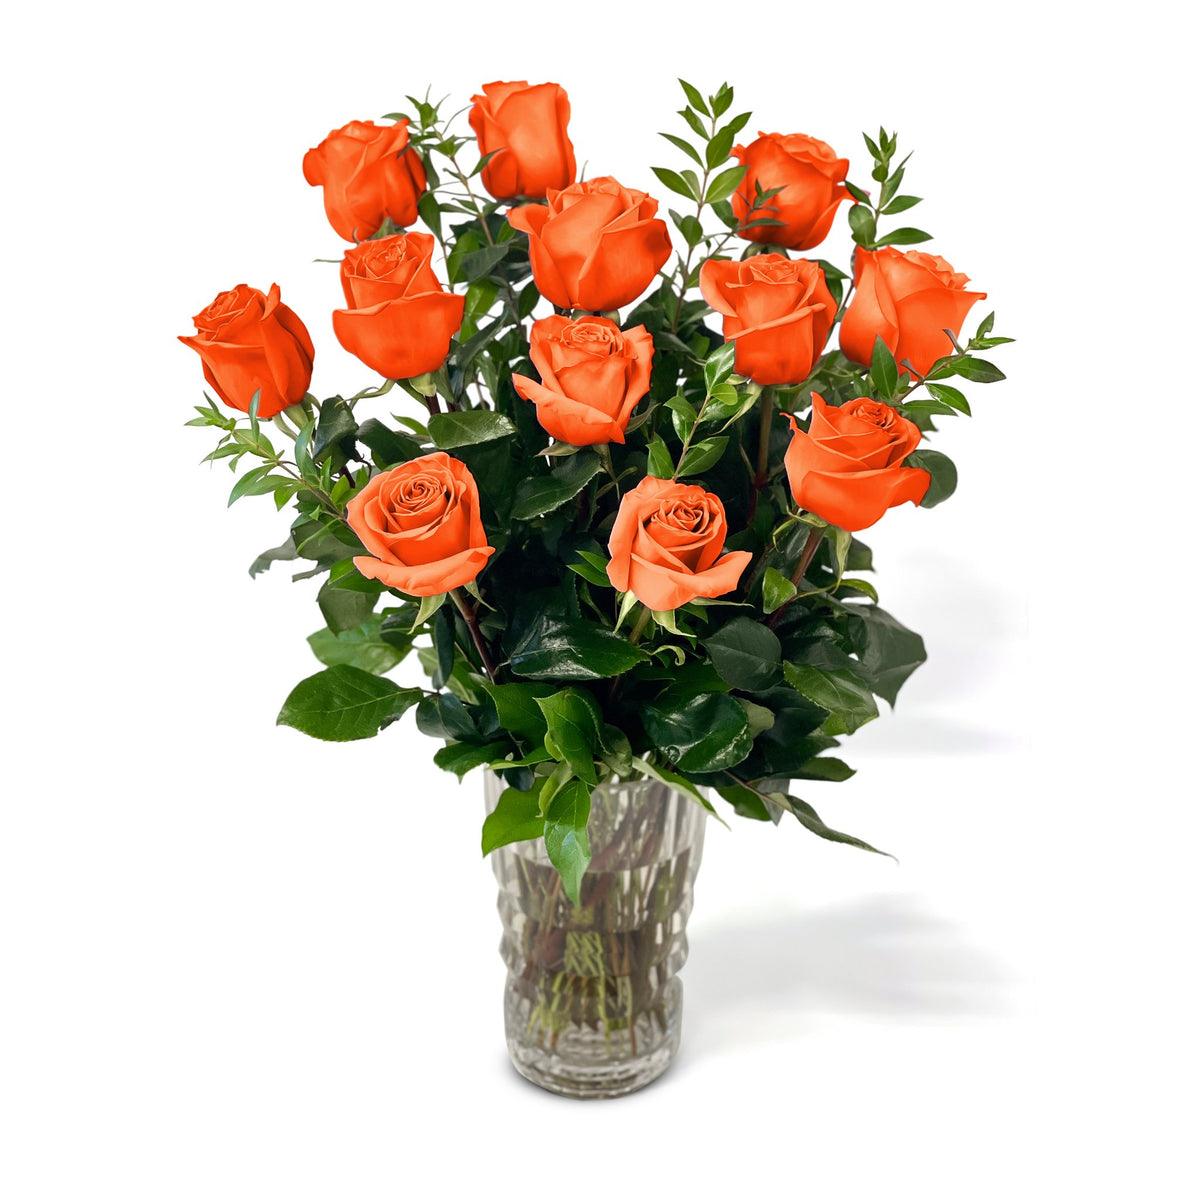 Queens Flower Delivery - Fresh Roses in a Crystal Vase | Orange - 1 Dozen